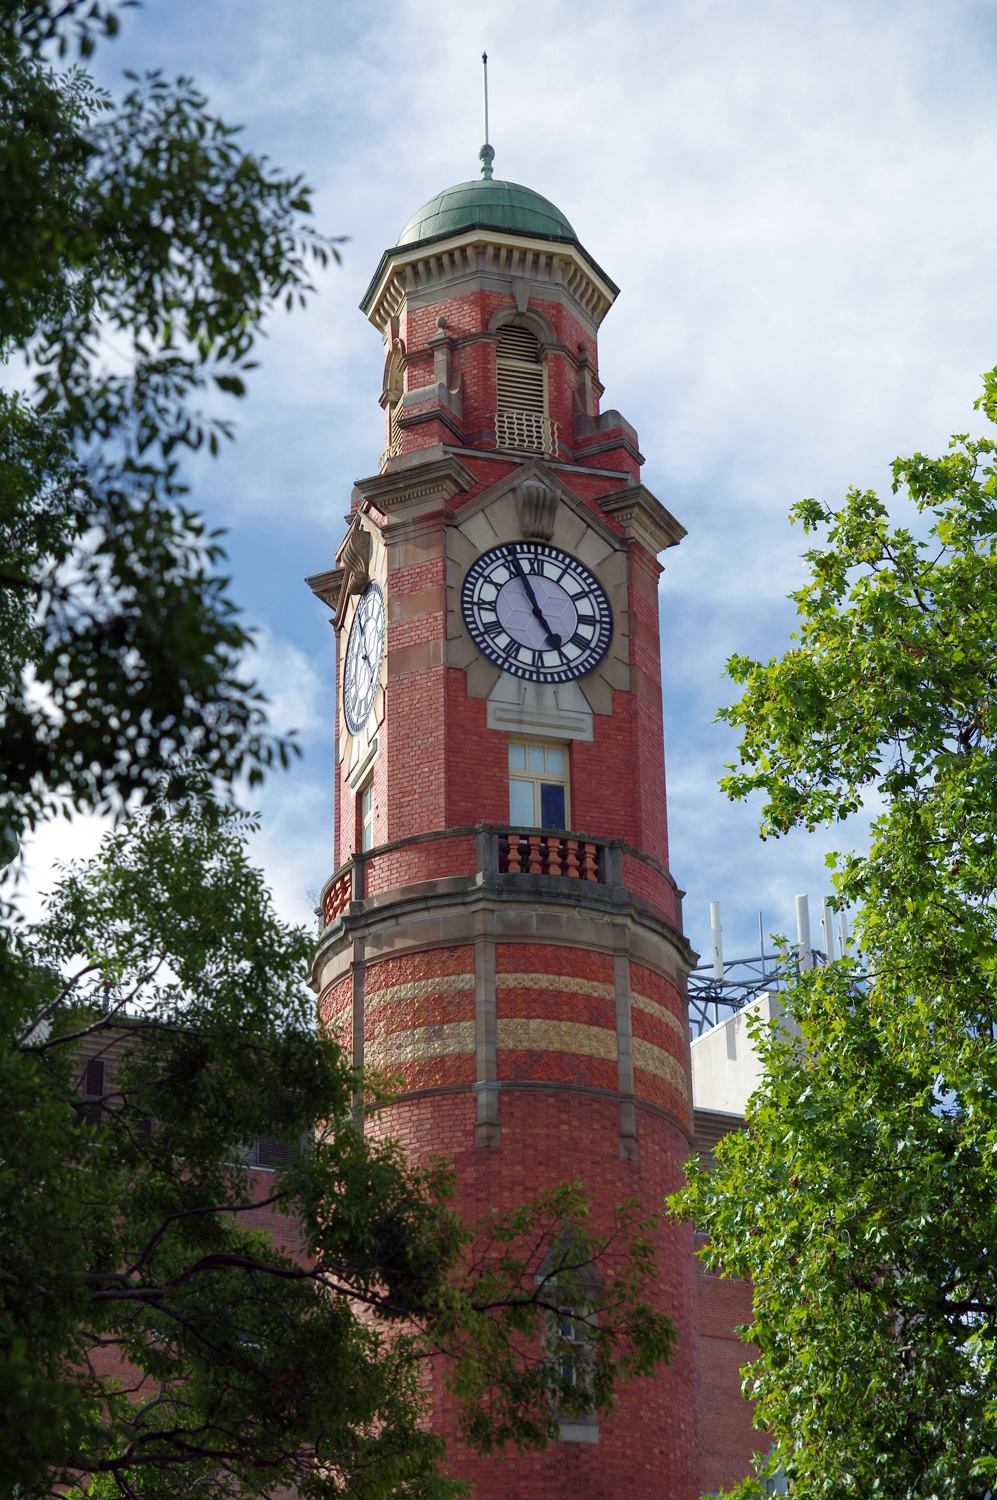 Launceston Clocktower